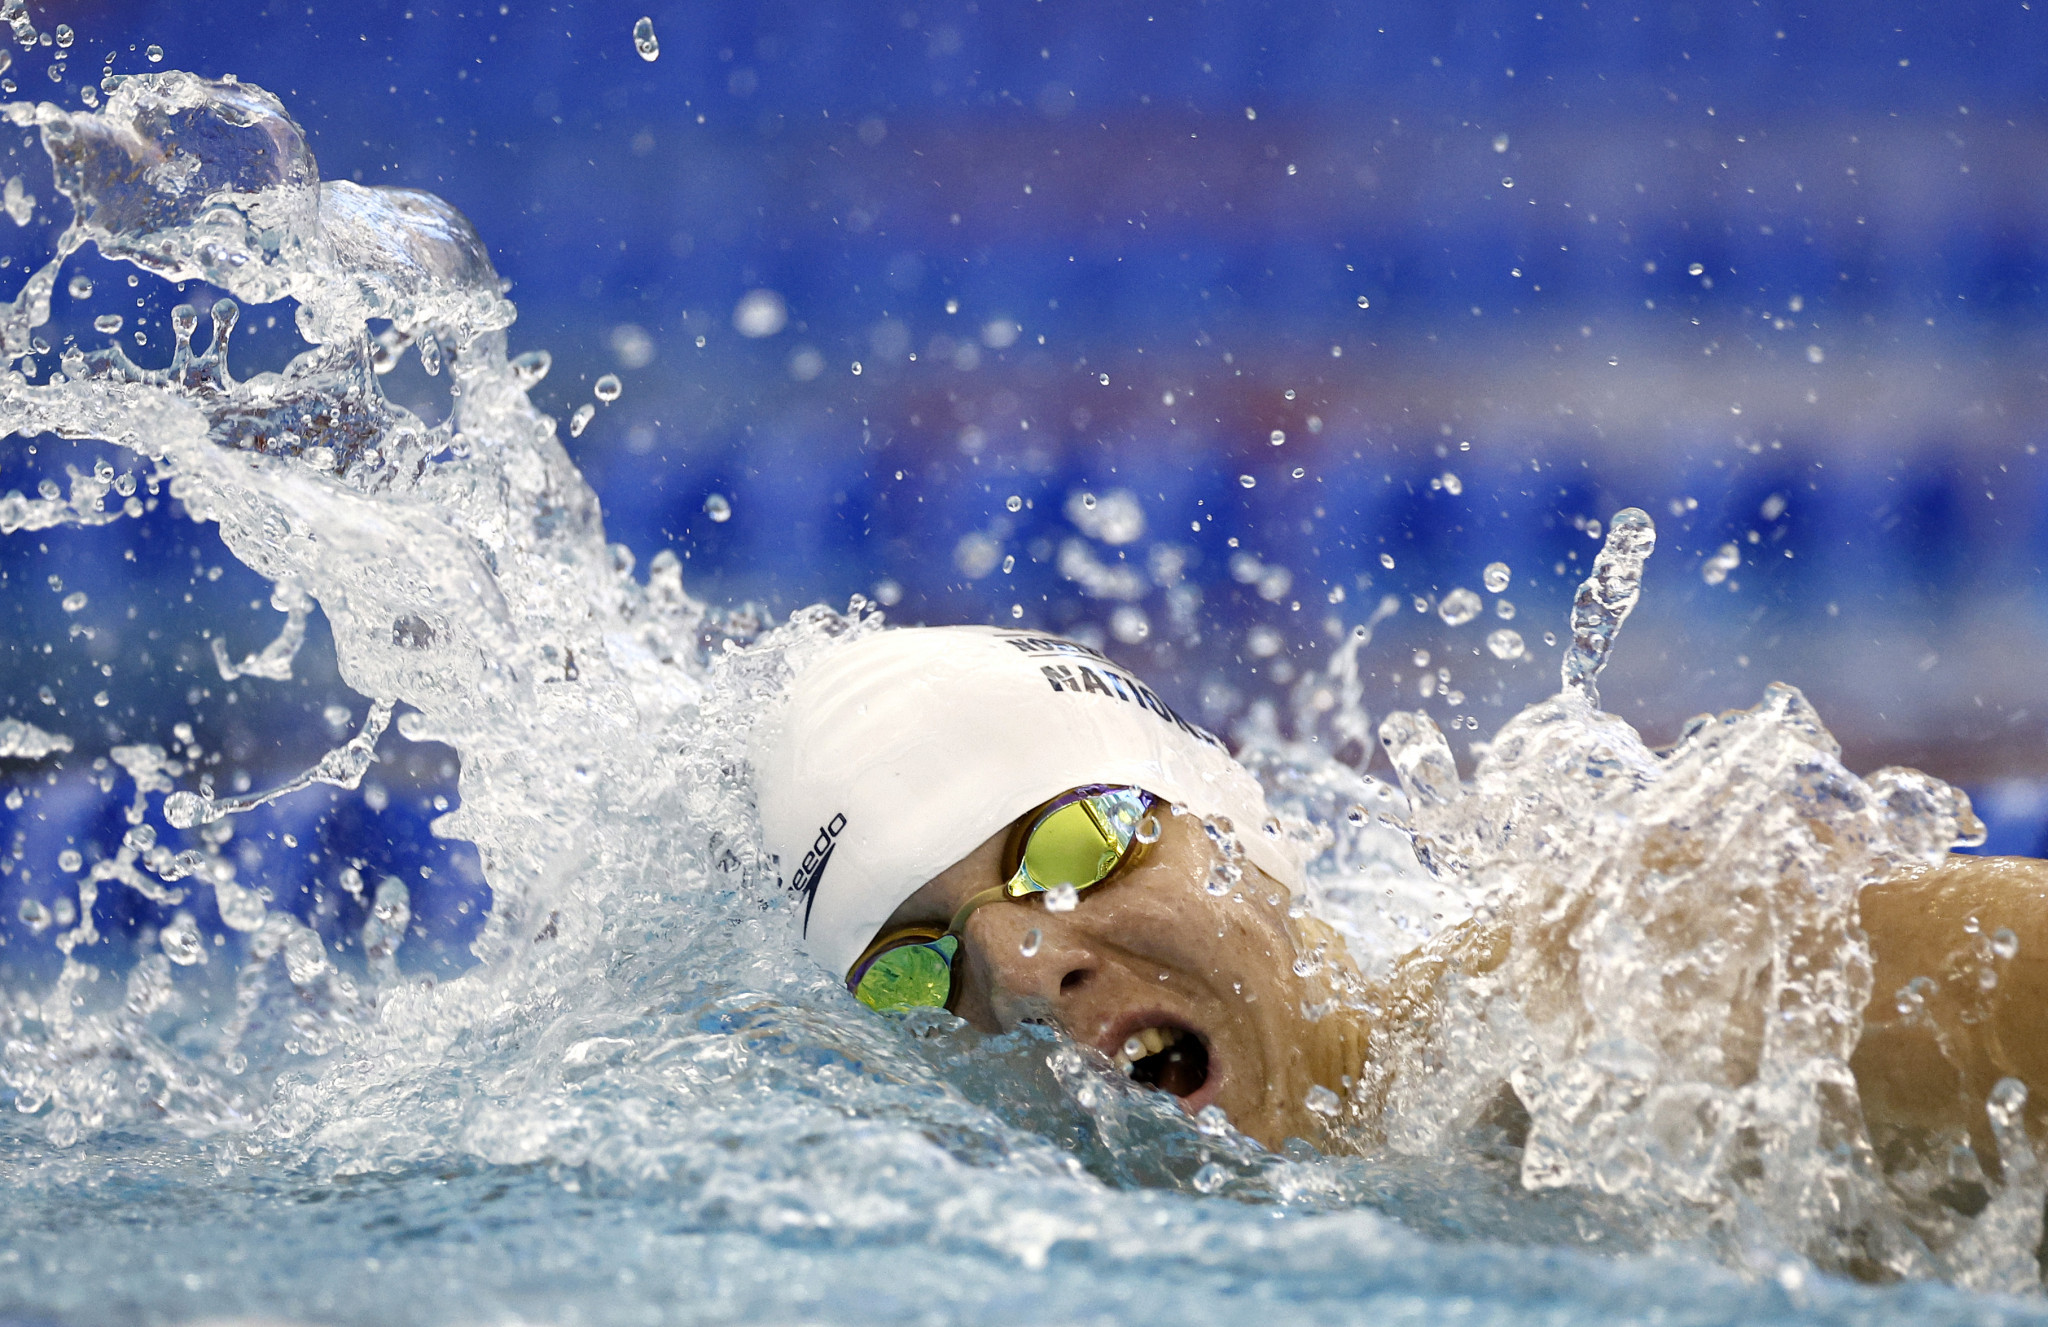 Six swimmers claim double gold at World Aquatics Junior Swimming Championships